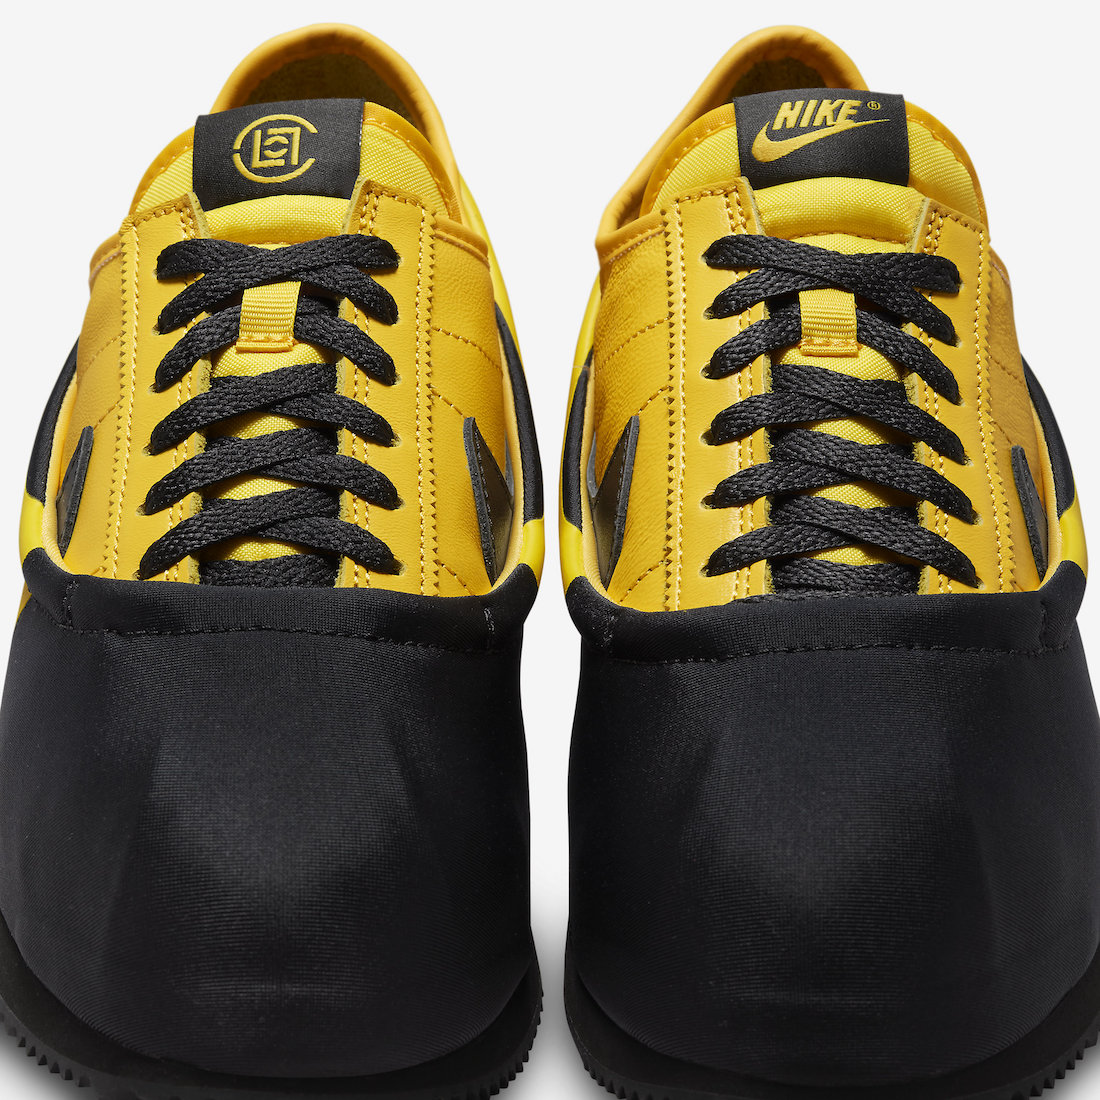 CLOT Nike Cortez Bruce Lee DZ3239 001 Release Date 8